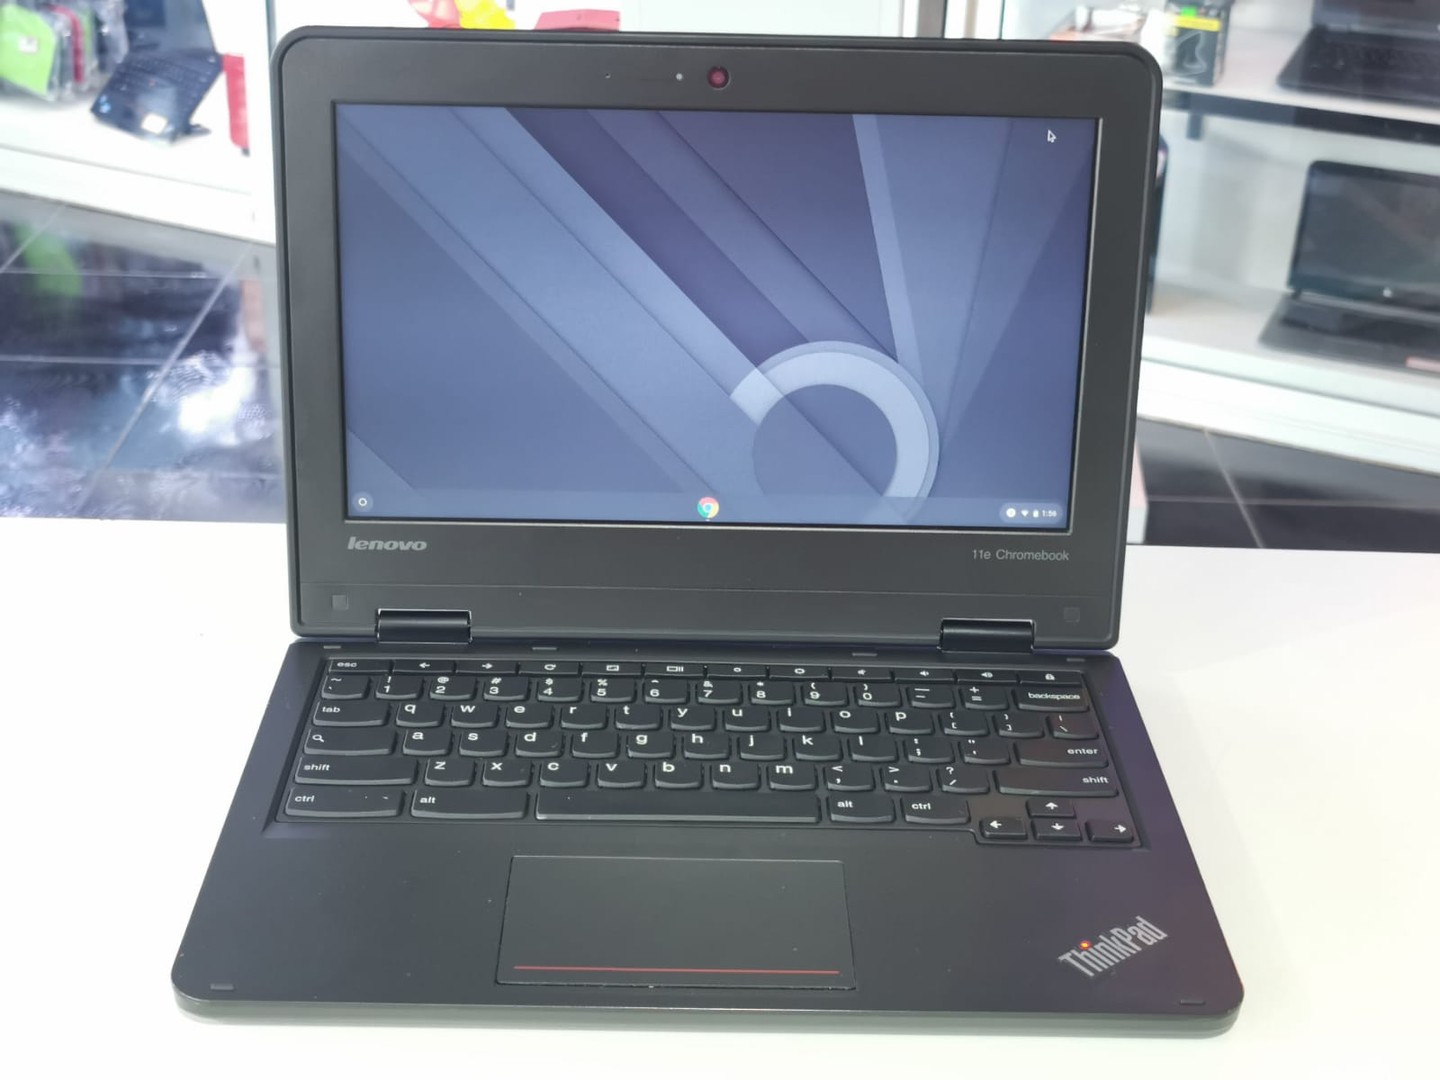 computadoras y laptops - Laptop Lenovo Thinkpad 11e Chromebook 4gb ram 16gb SSD oferta 